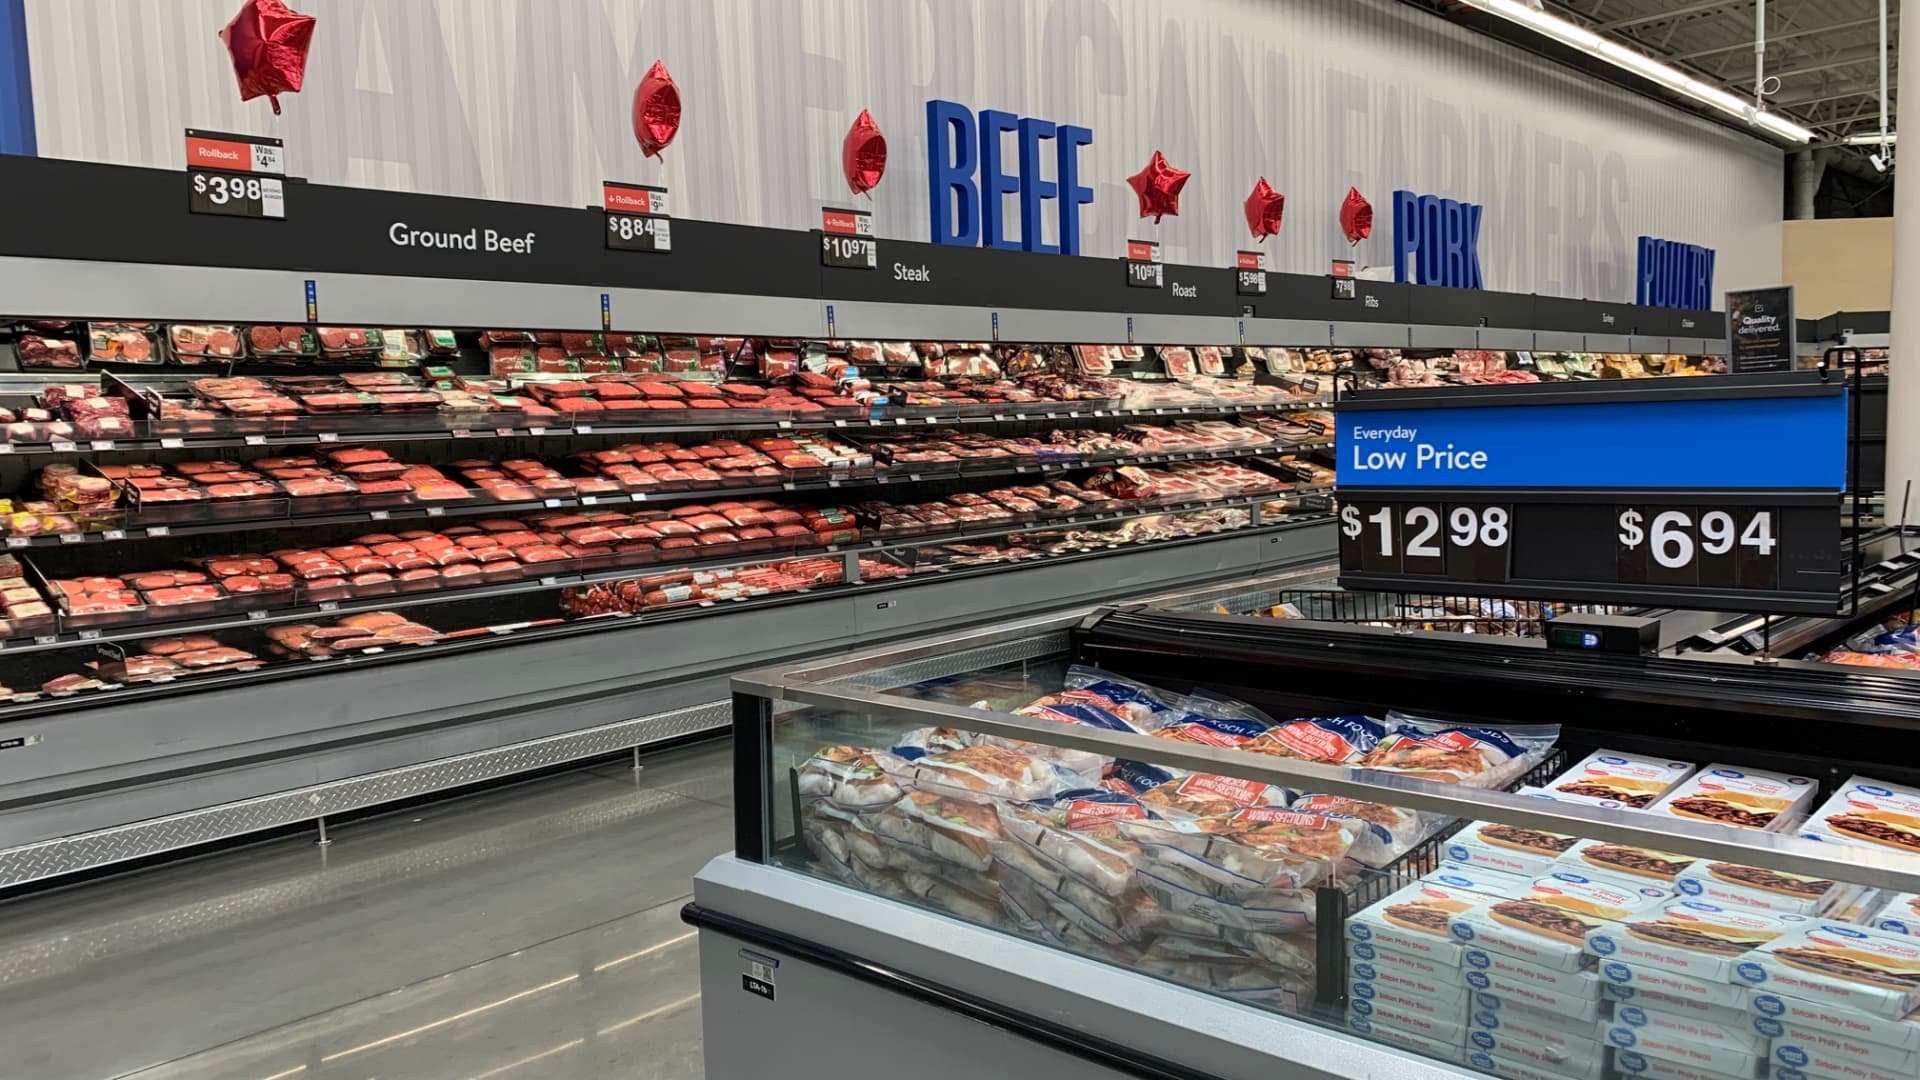 Walmart invests in ranchers’ firm as buyers favor premium beef